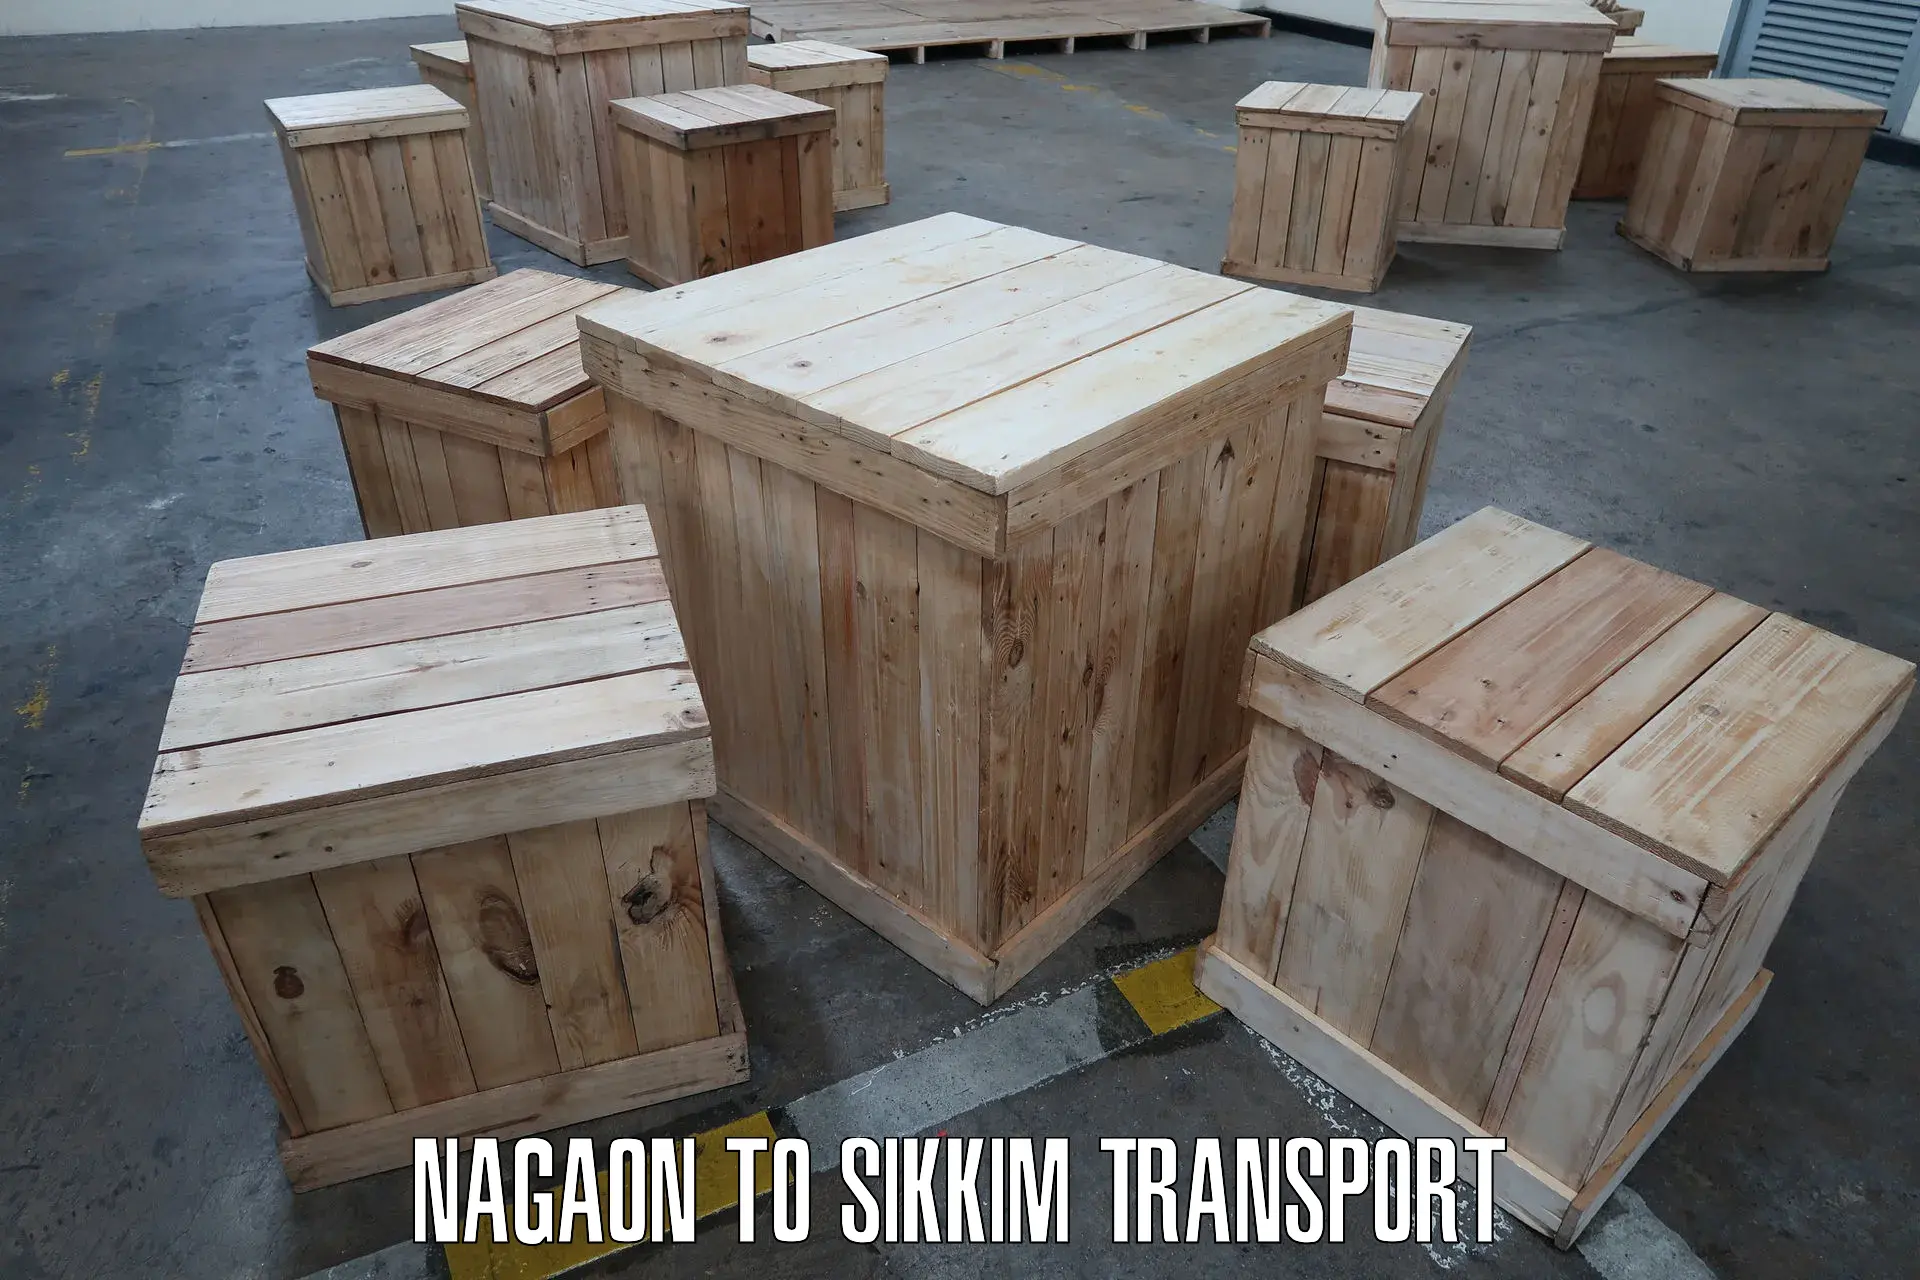 Transport in sharing Nagaon to Gangtok